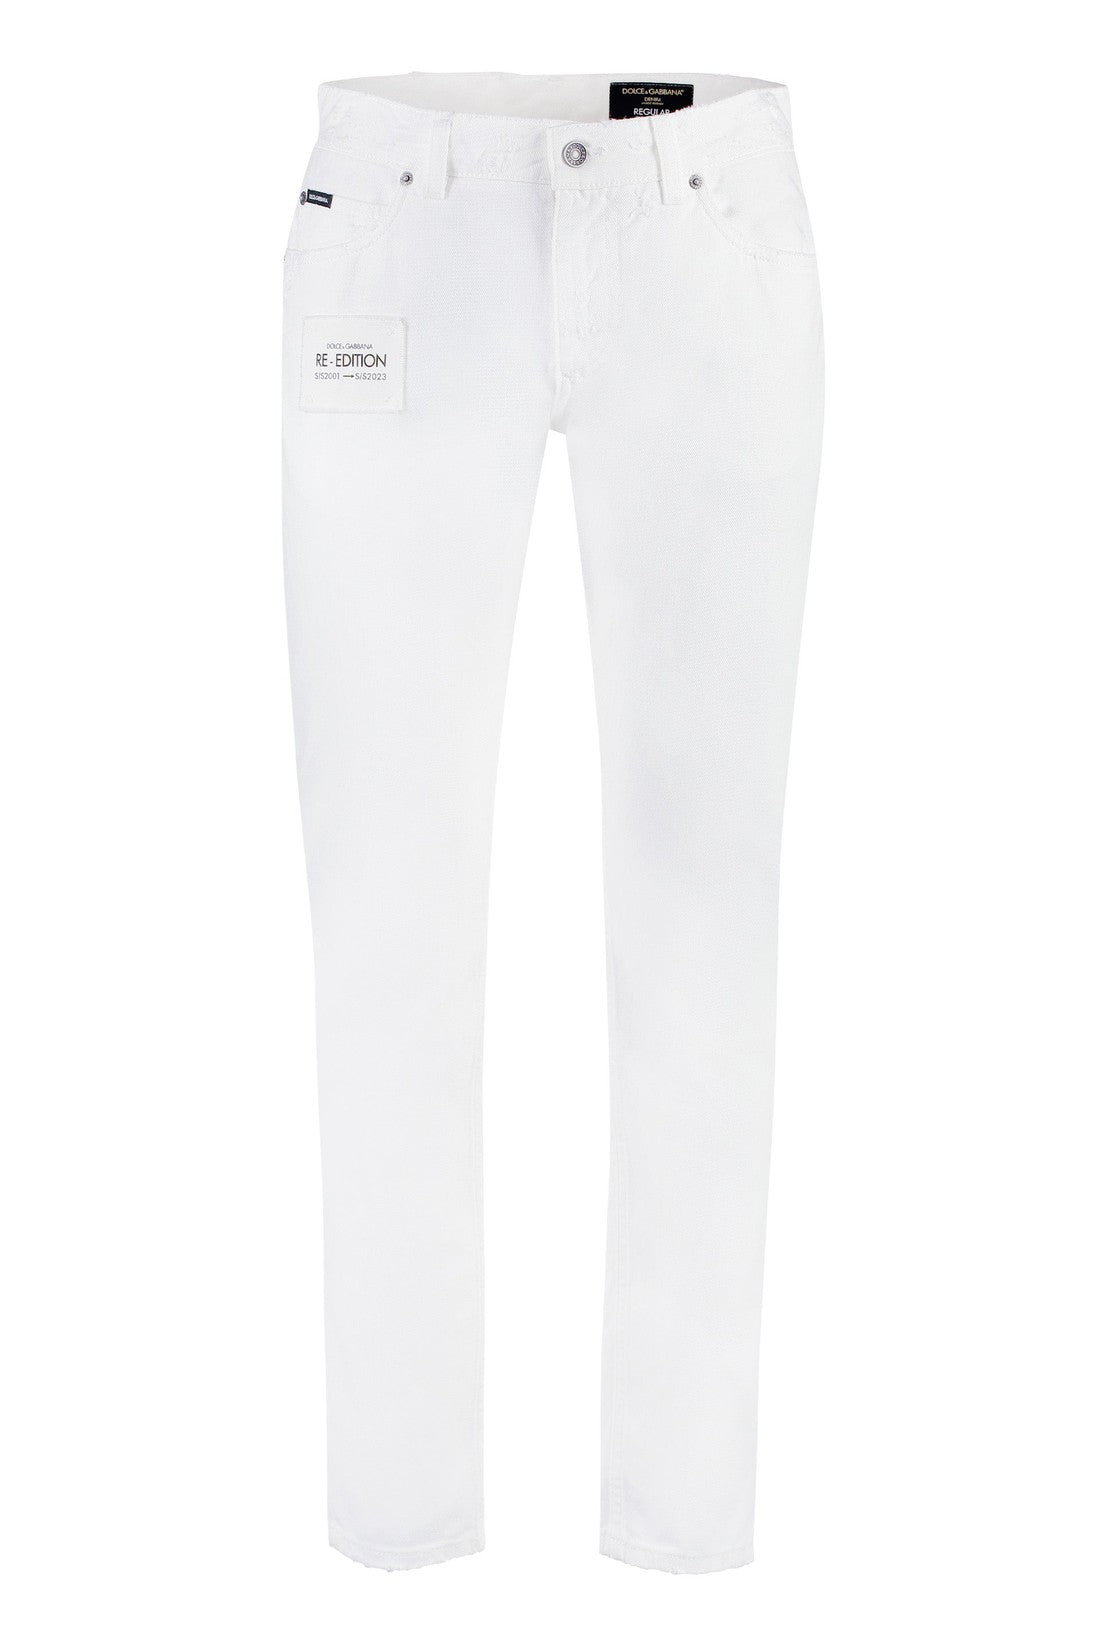 Dolce & Gabbana-OUTLET-SALE-Regular fit jeans-ARCHIVIST